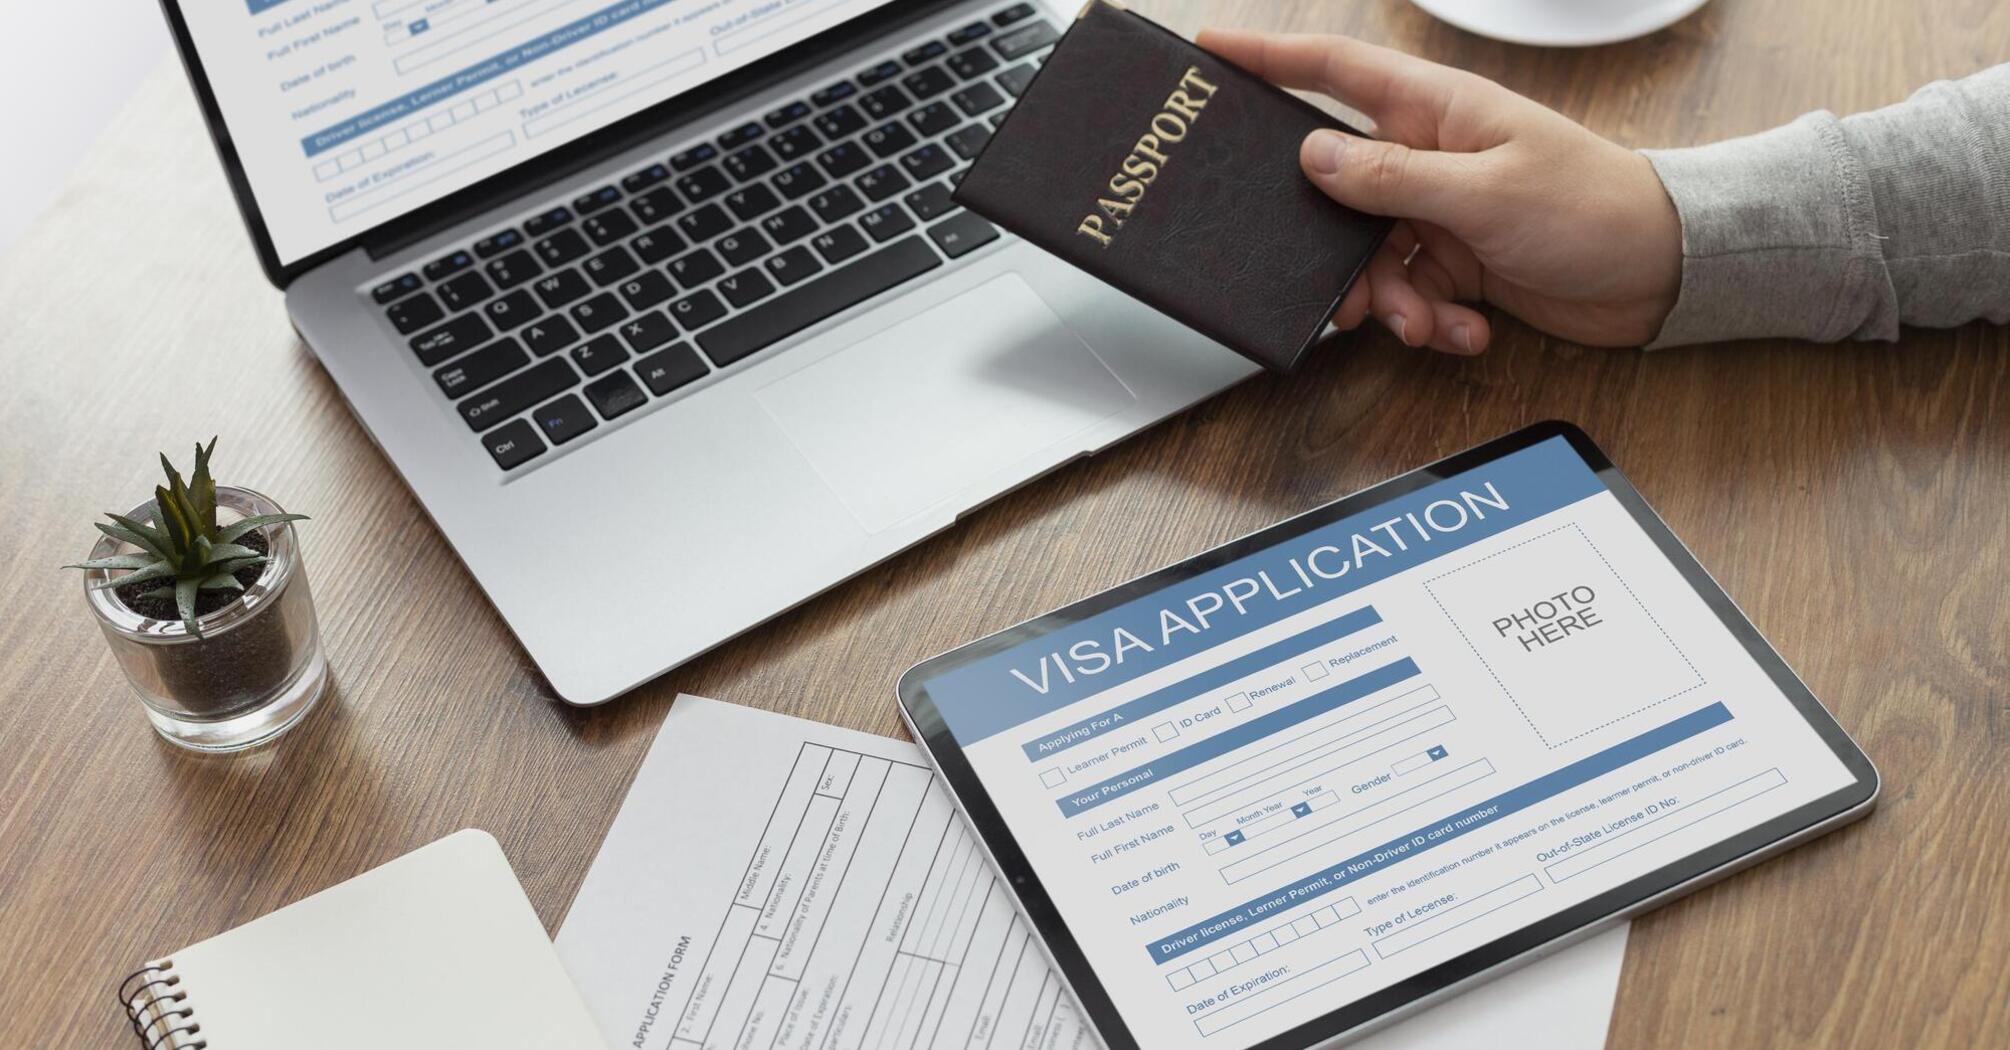 Phuket simplifies visa renewal by implementing an online system